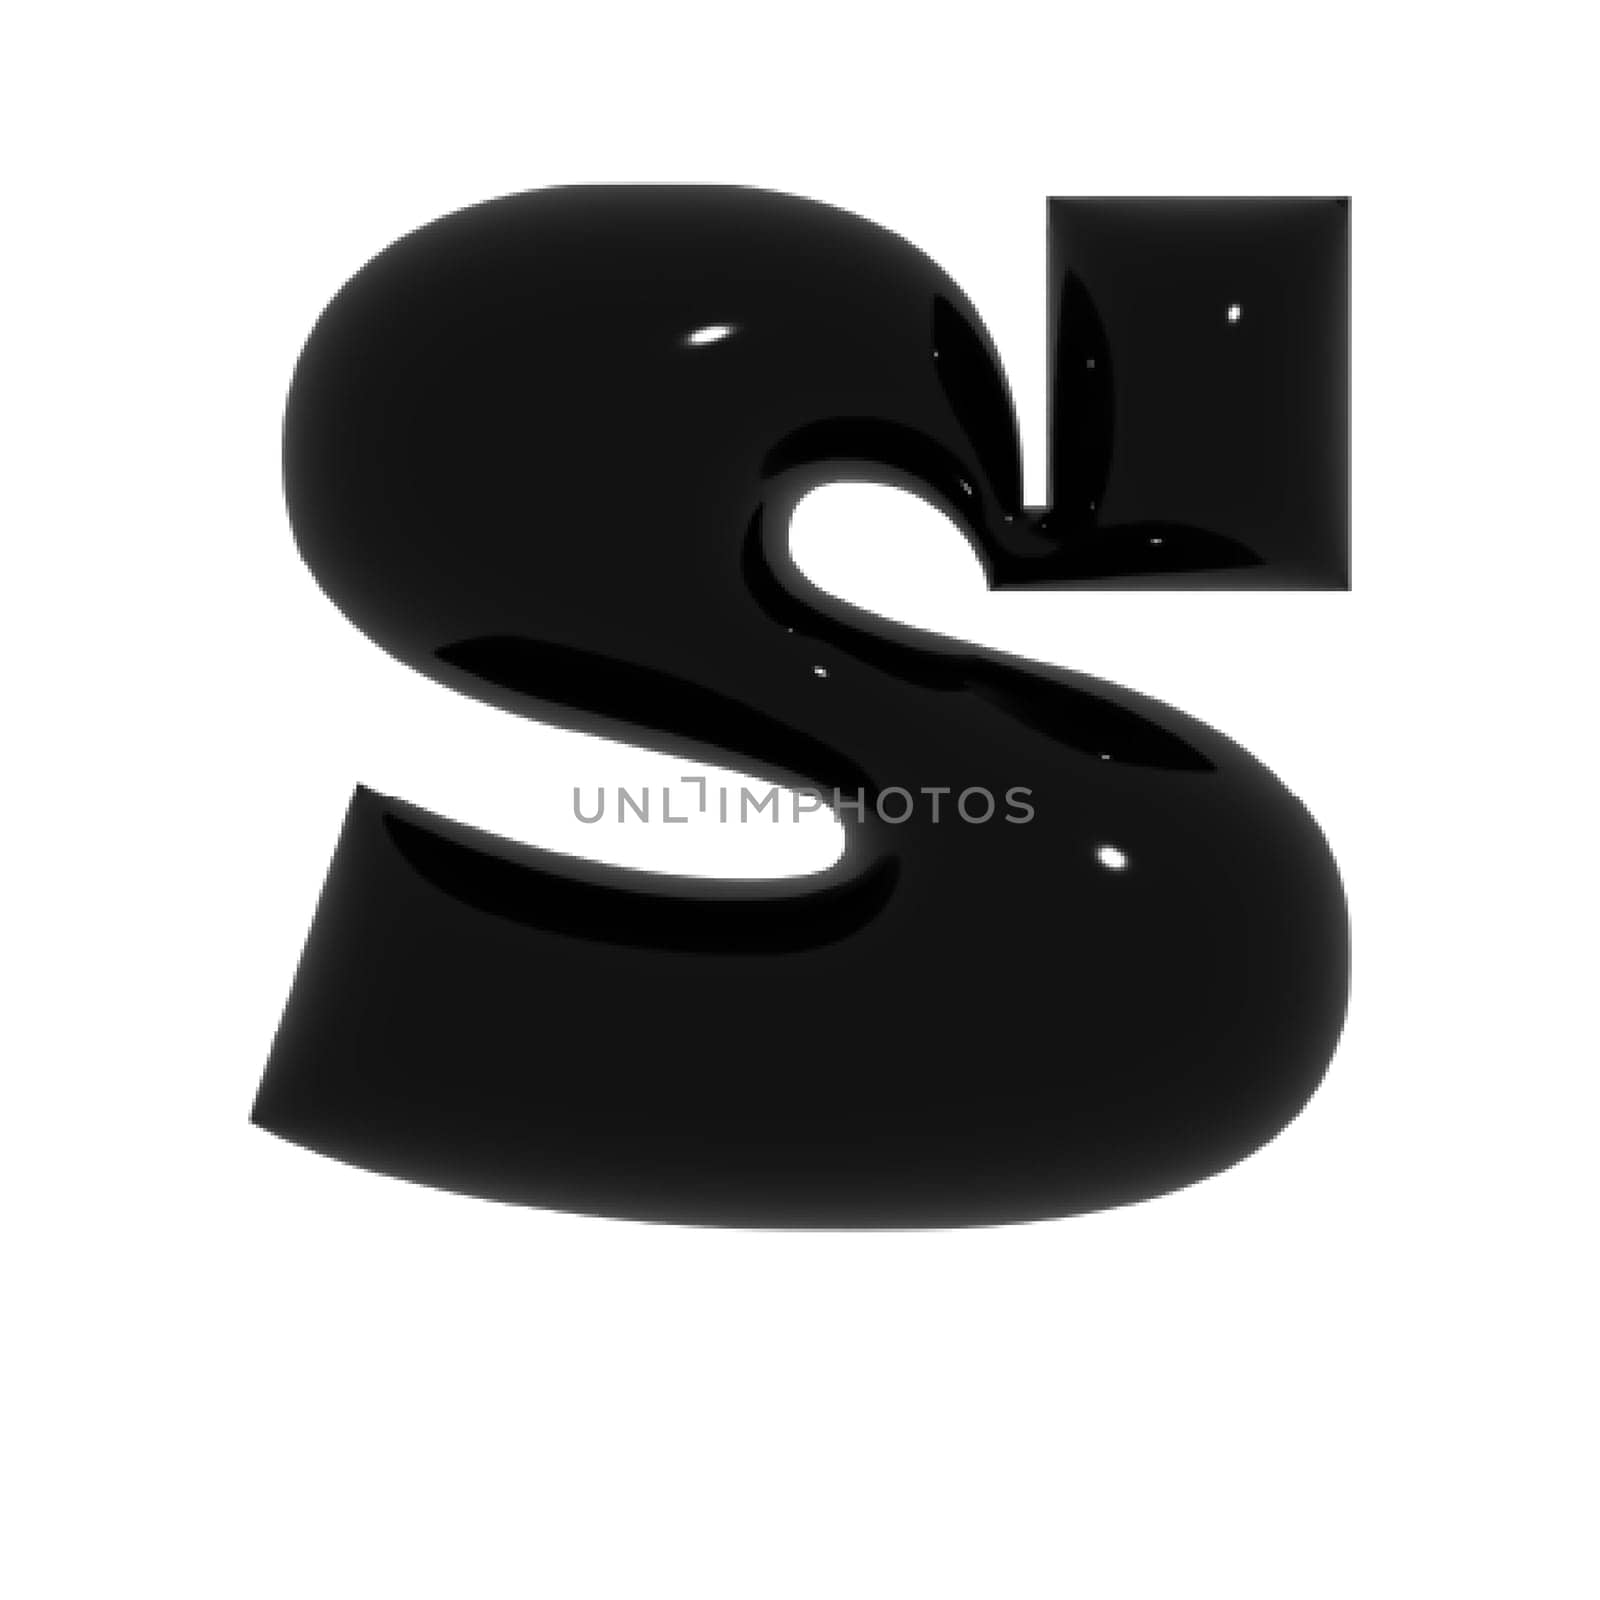 Black metal shiny reflective letter S 3D illustration by Dustick